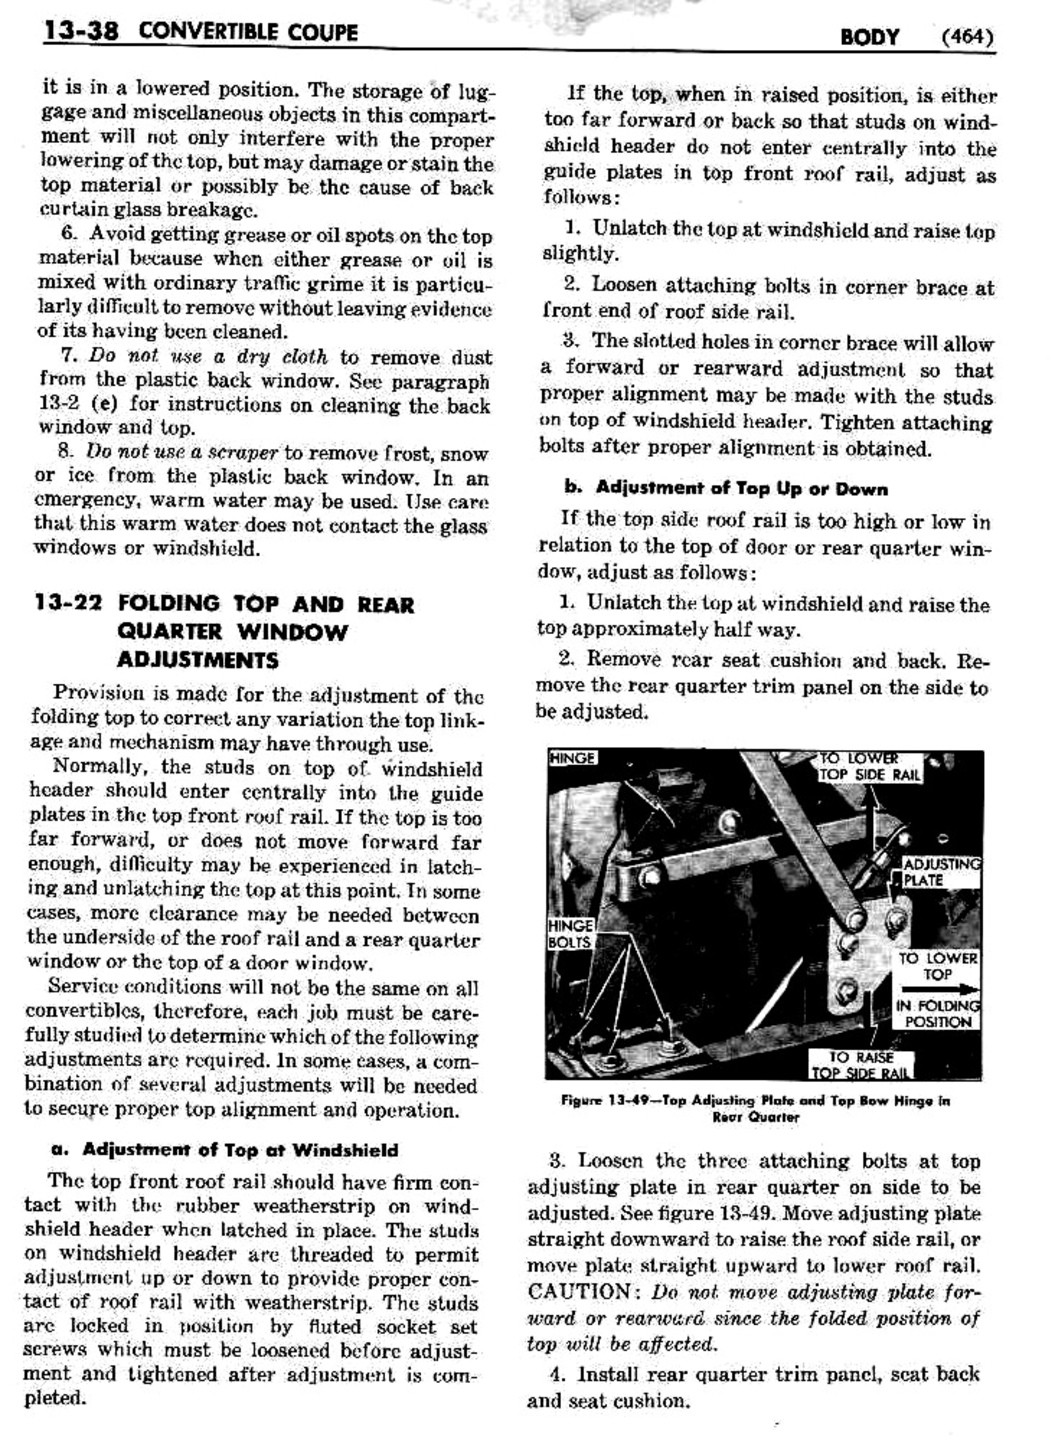 n_14 1951 Buick Shop Manual - Body-038-038.jpg